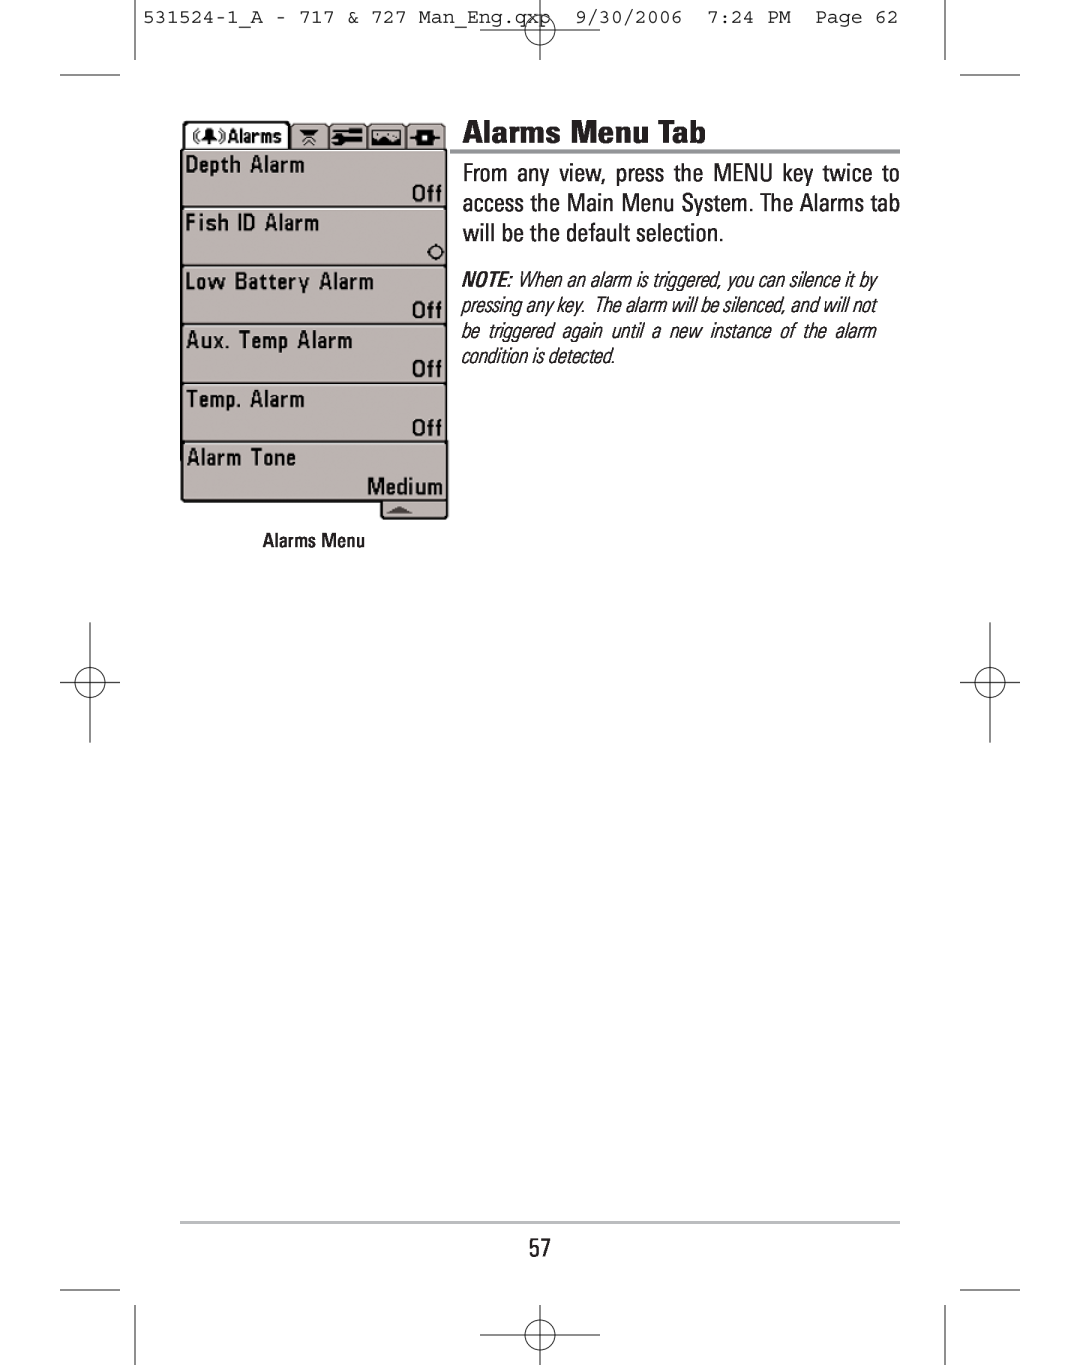 Humminbird manual Alarms Menu Tab, 531524-1A - 717 & 727 ManEng.qxp 9/30/2006 724 PM Page 